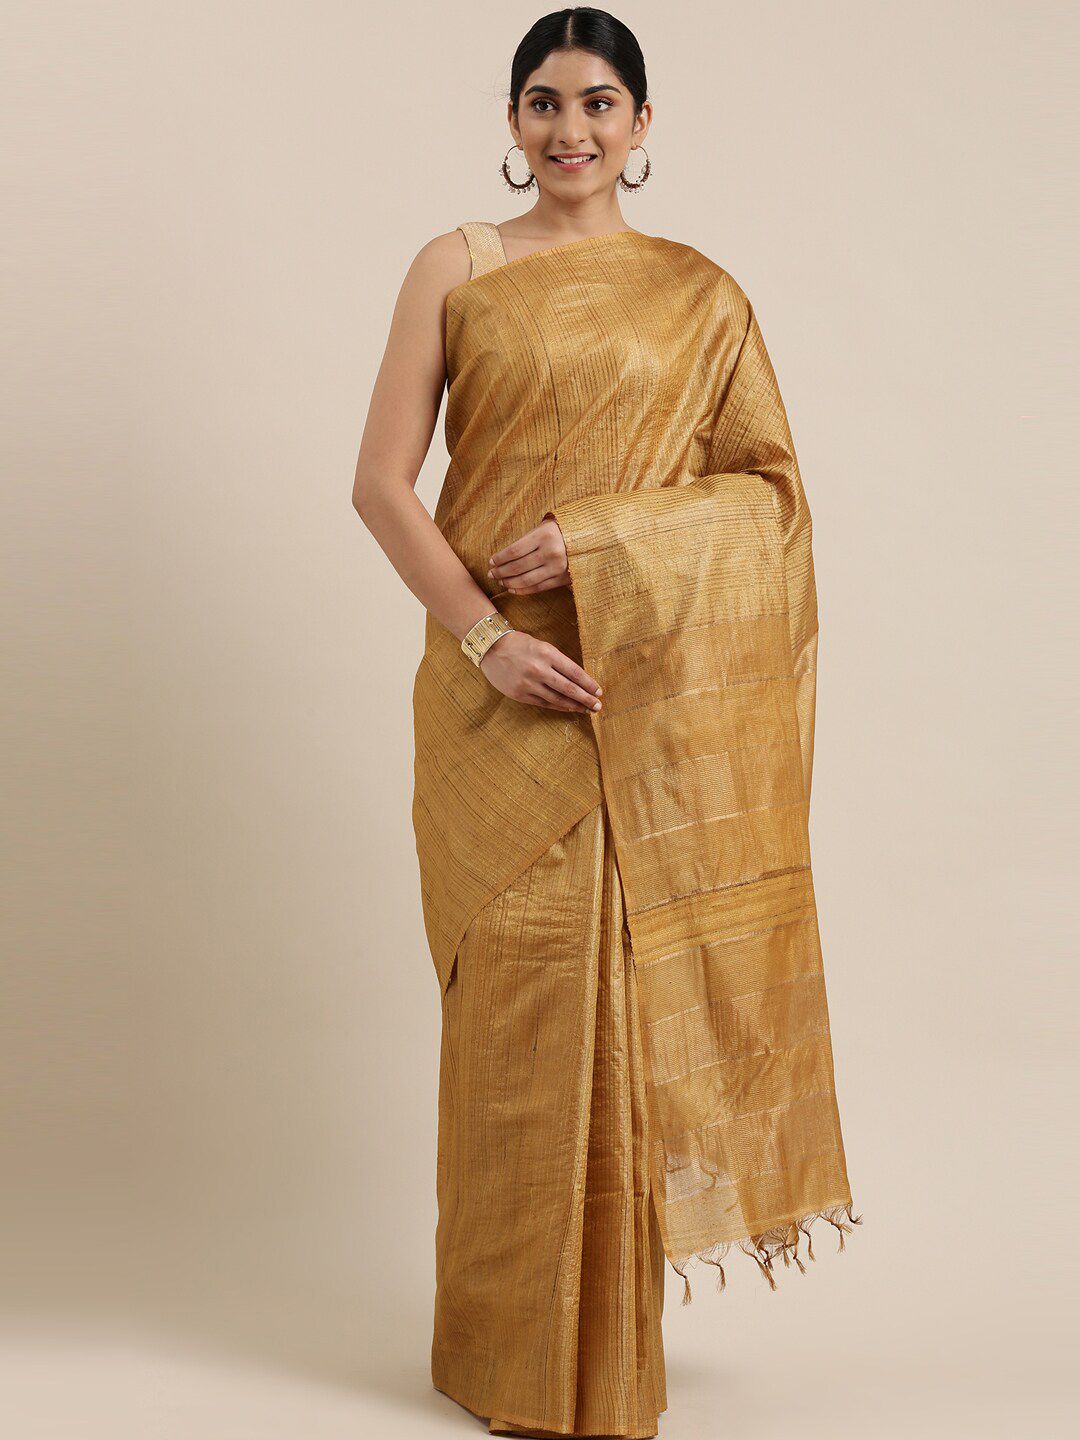 The Chennai Silks Golden Striped Saree Price in India